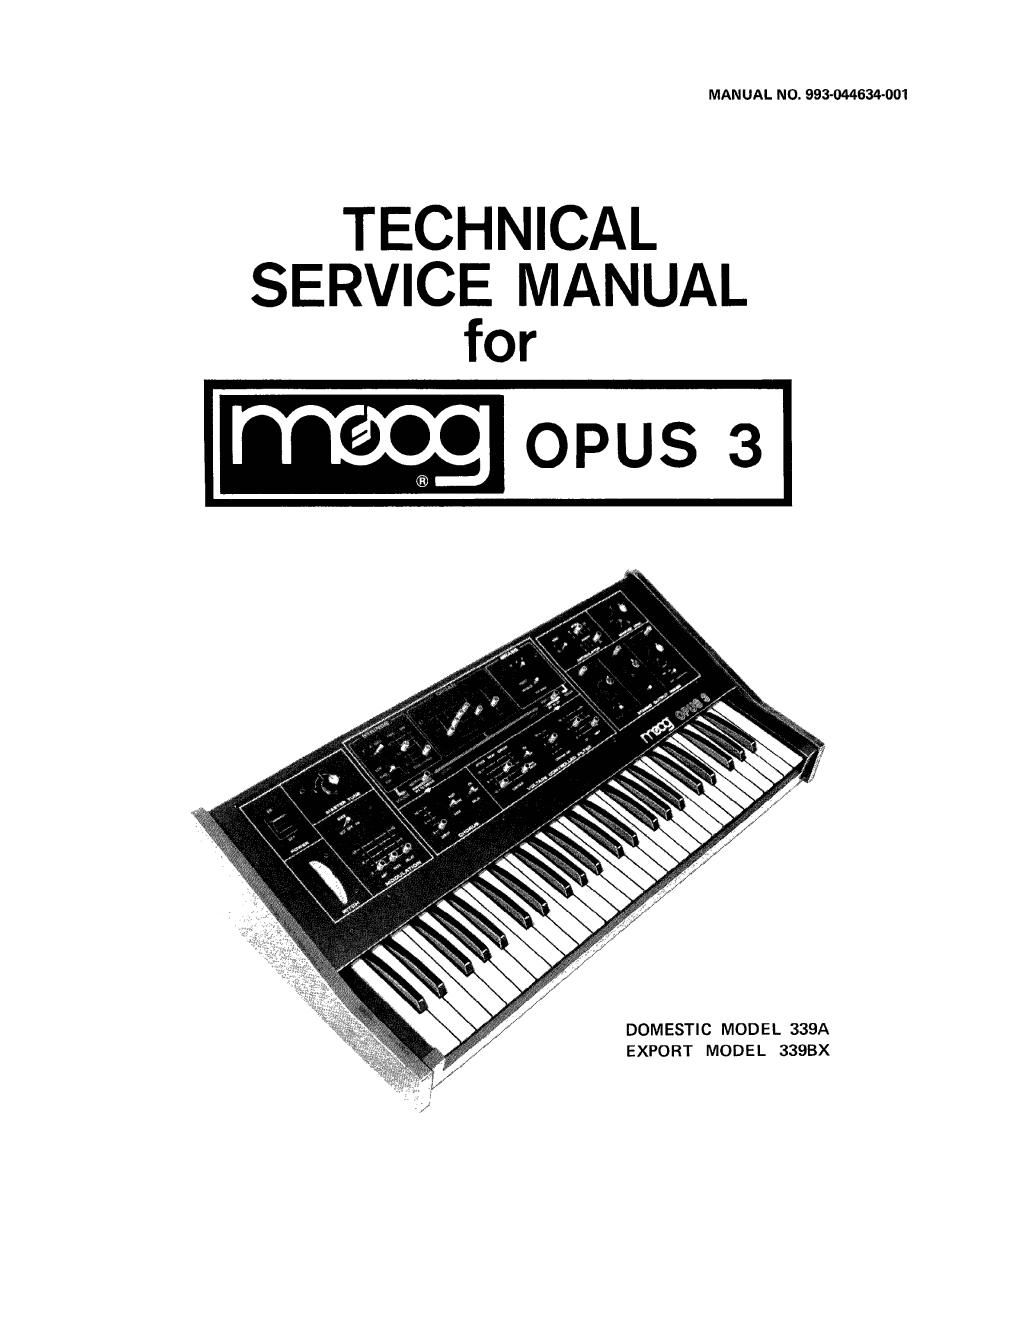 moog opus 3 service manual rvgm